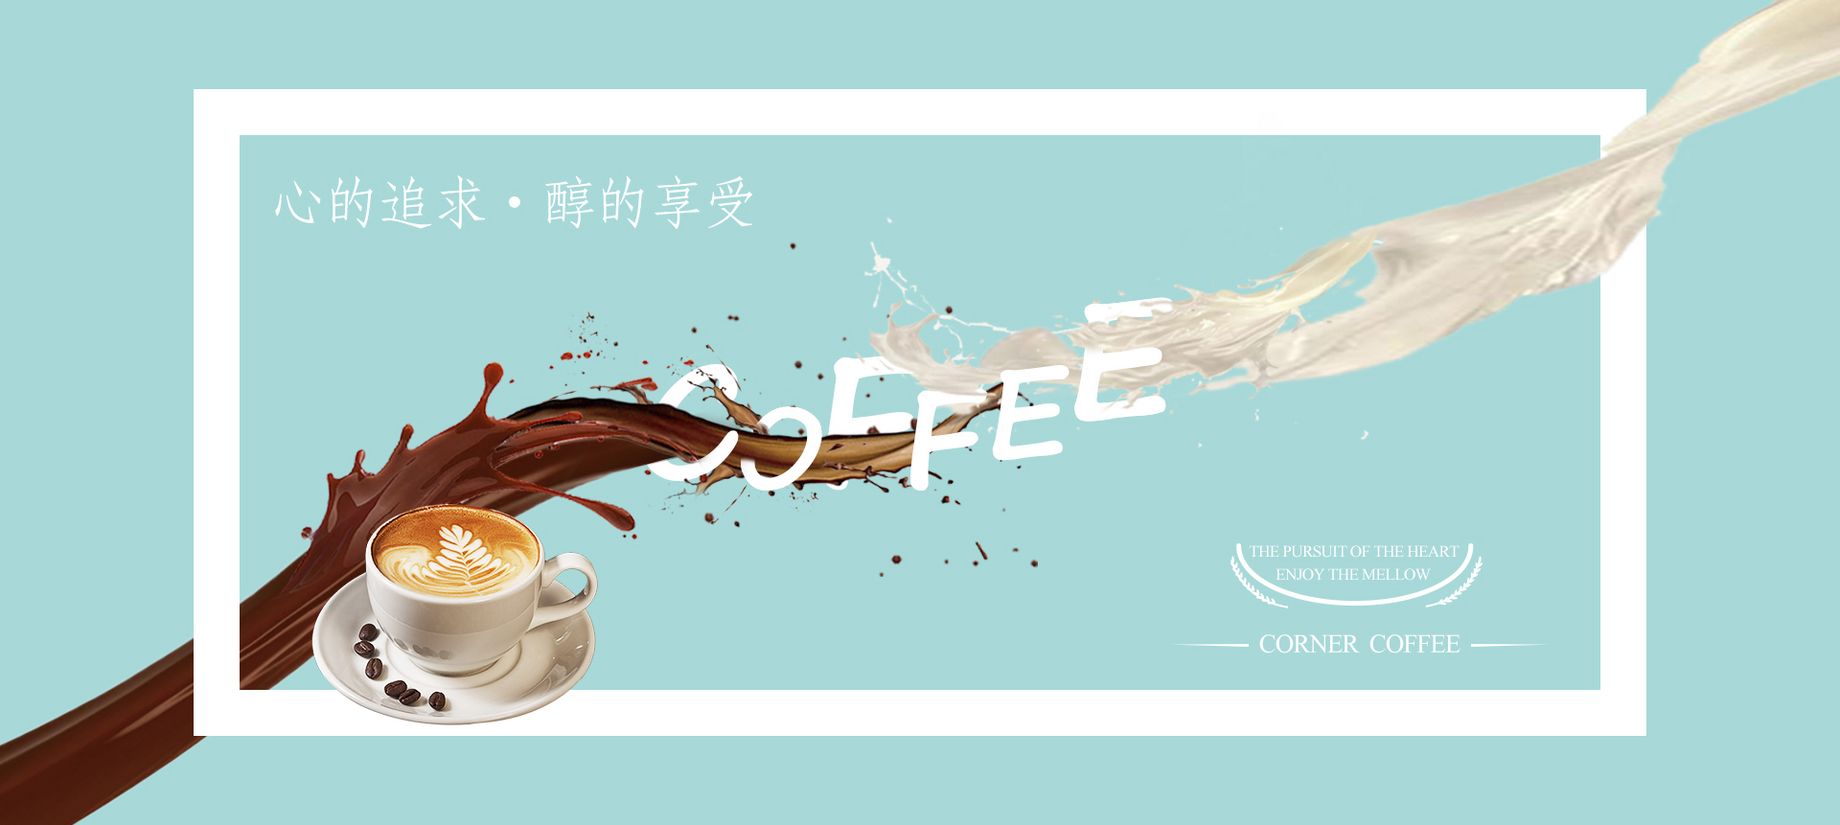 PS-咖啡简约风宣传海报